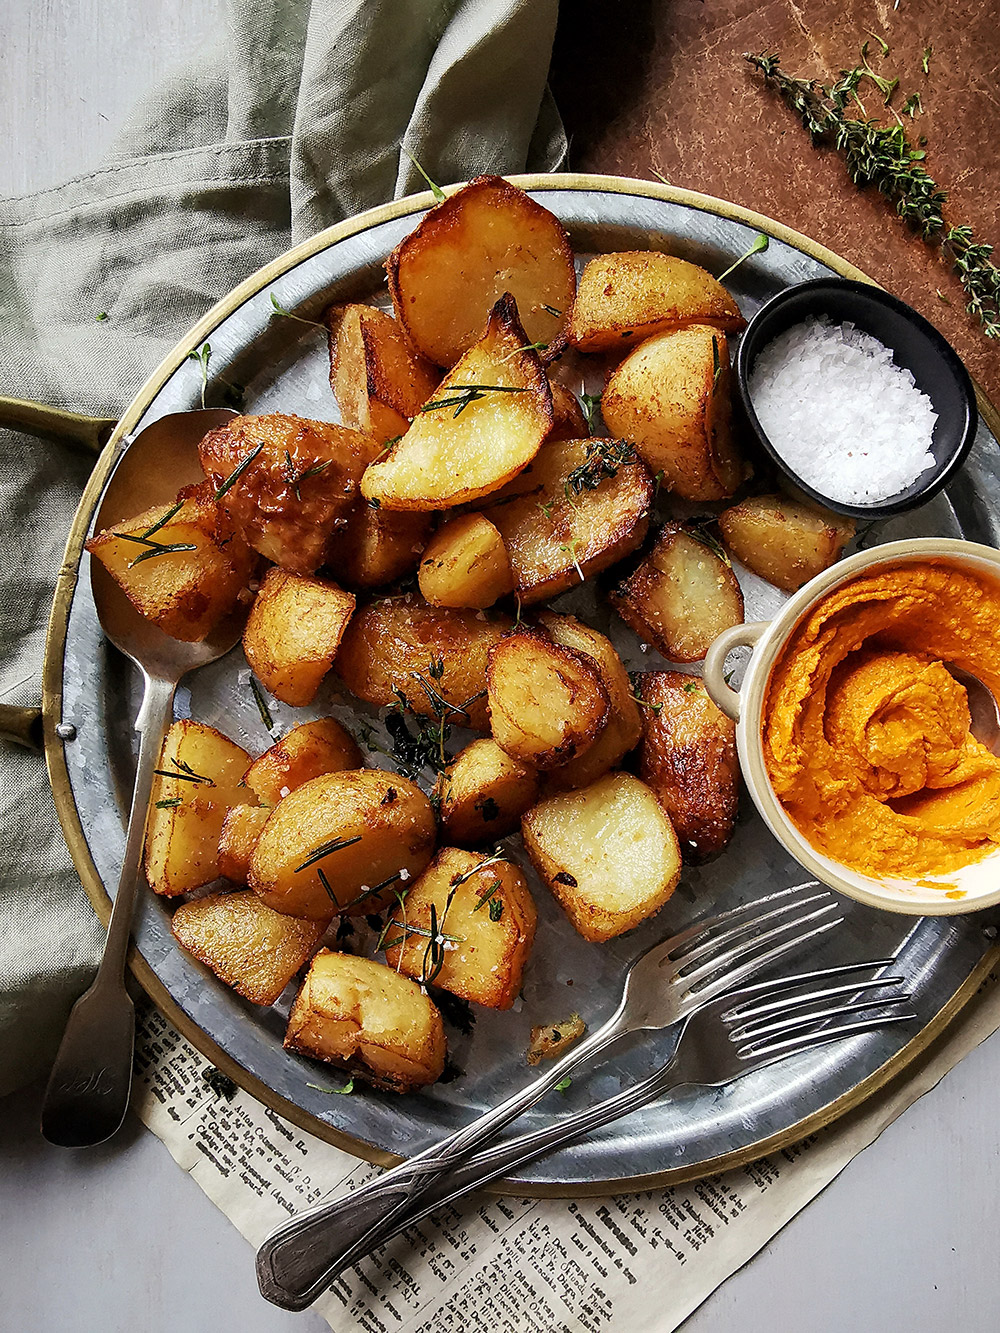 Heavenly roasted potatoes